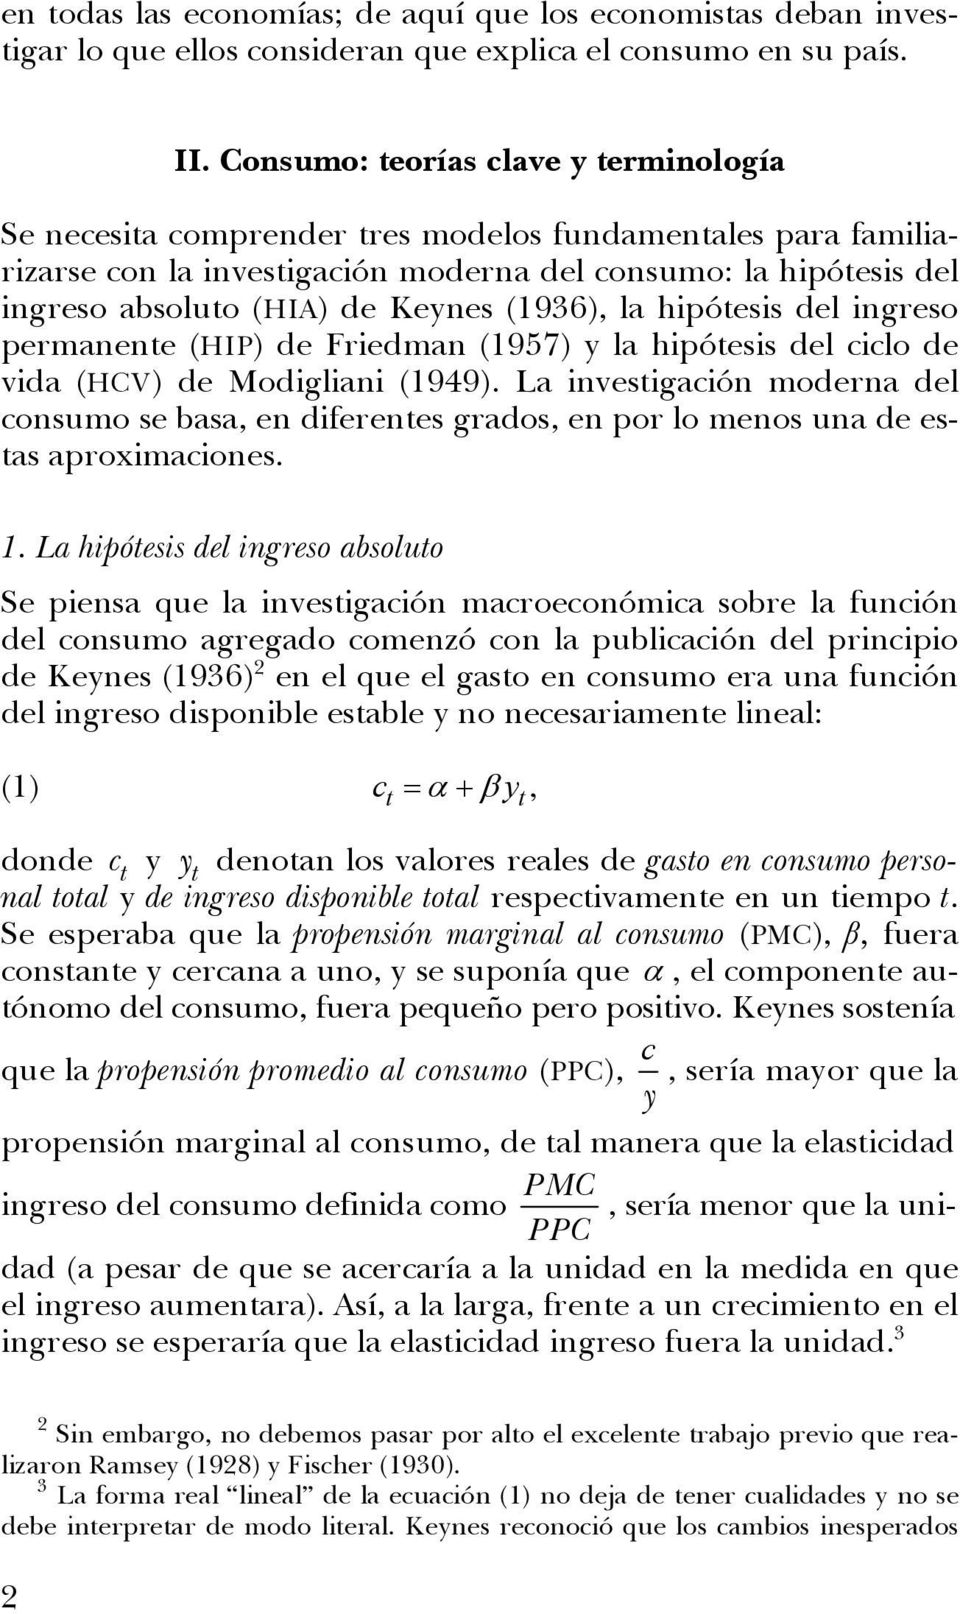 la hipóesis del ingreso permanene (HIP) de Friedman (957) y la hipóesis del ciclo de vida (HCV) de Modigliani (949).